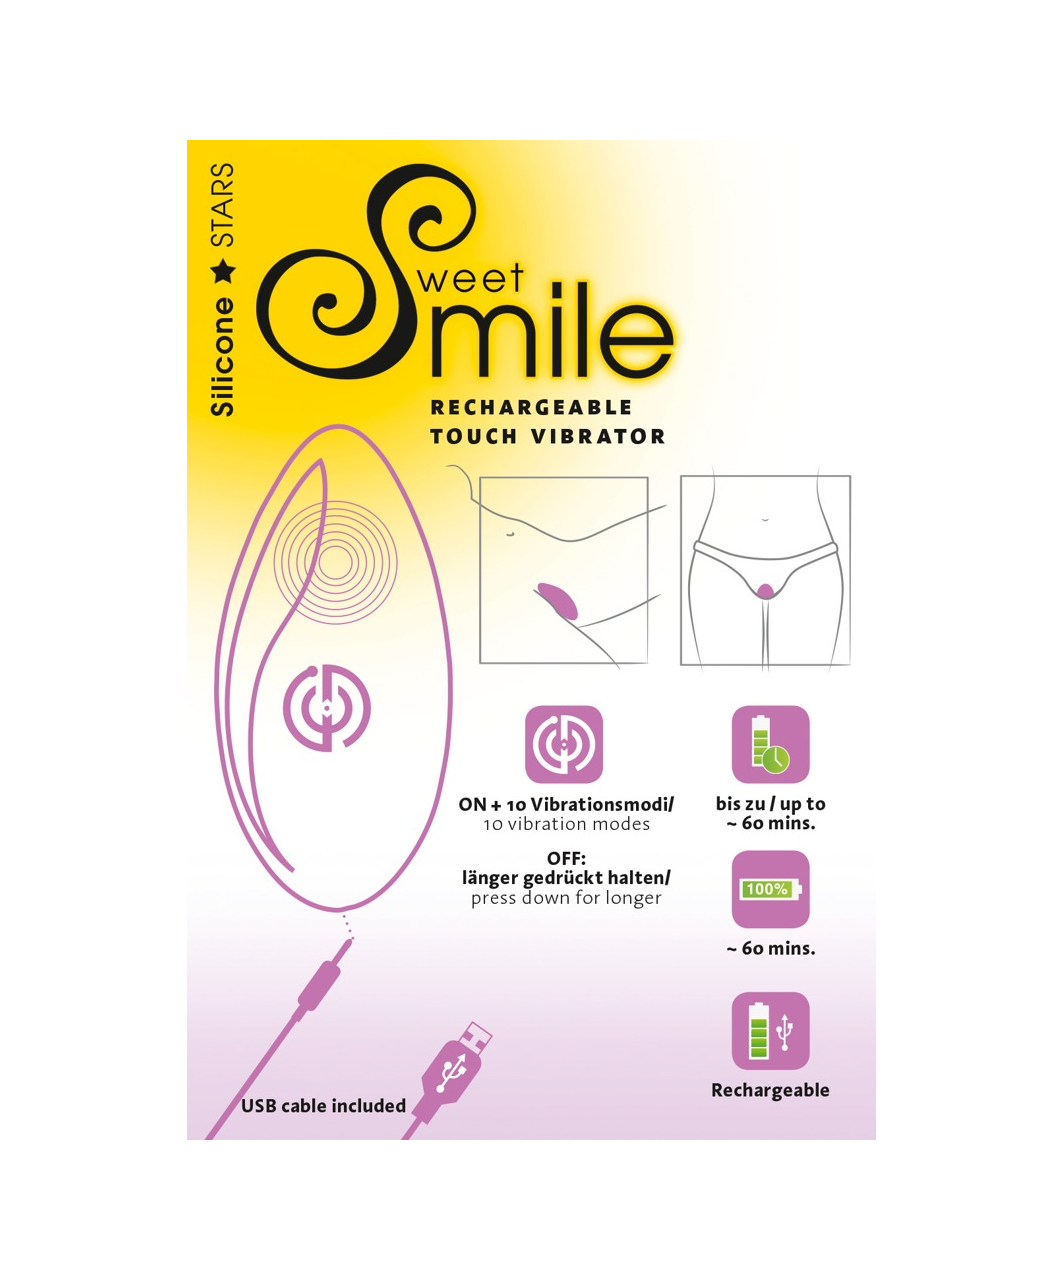 Smile Rechargeable Extra Slim Touch vibratorius